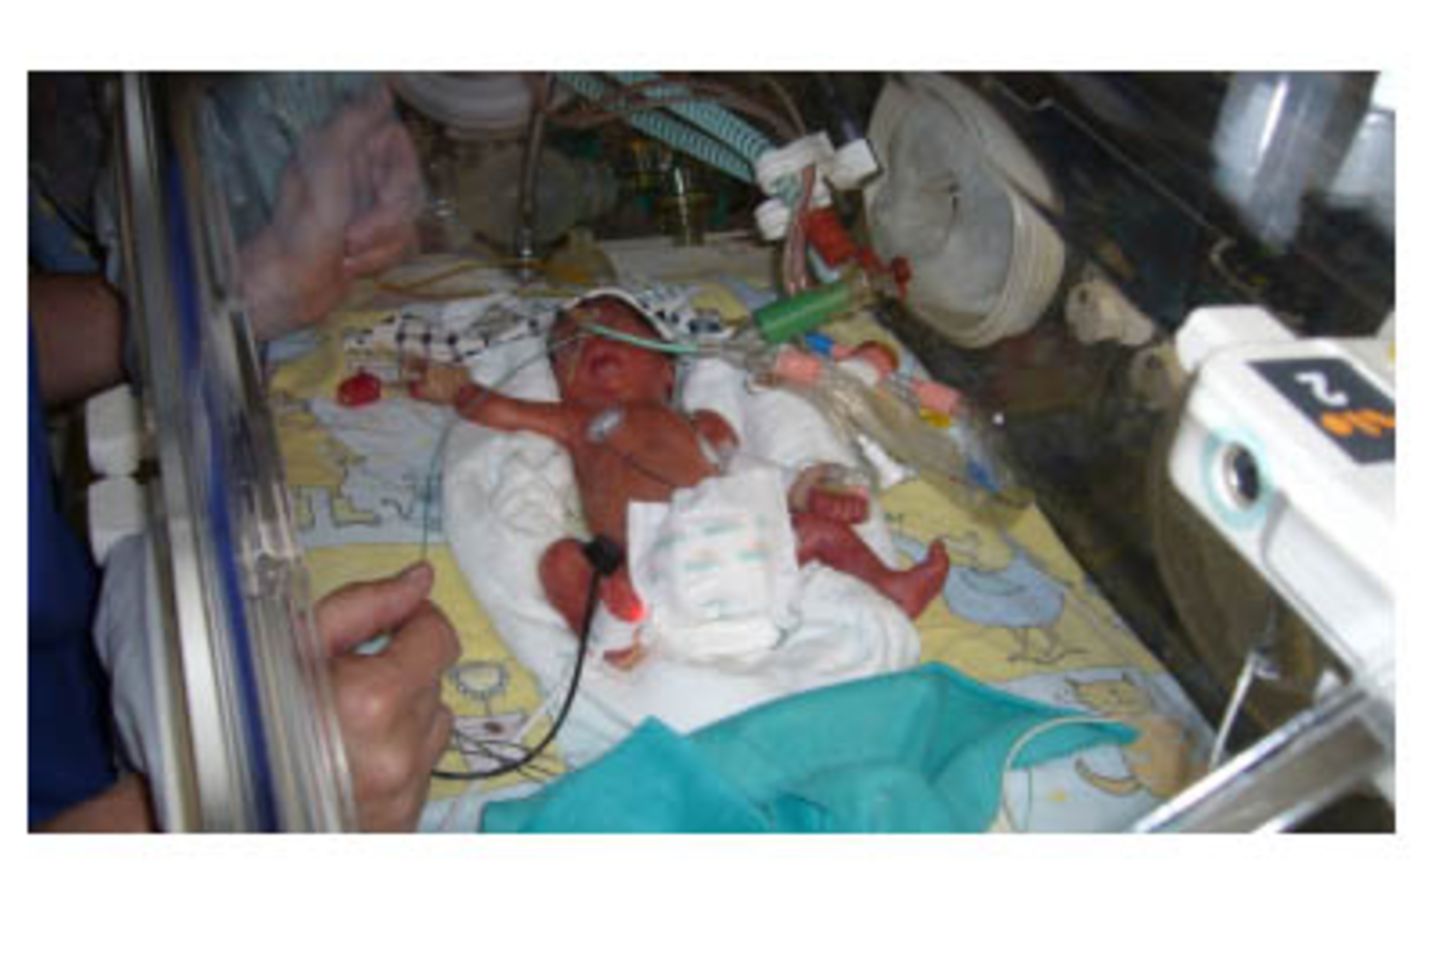 Amy-Felia - 12 Wochen zu früh geboren